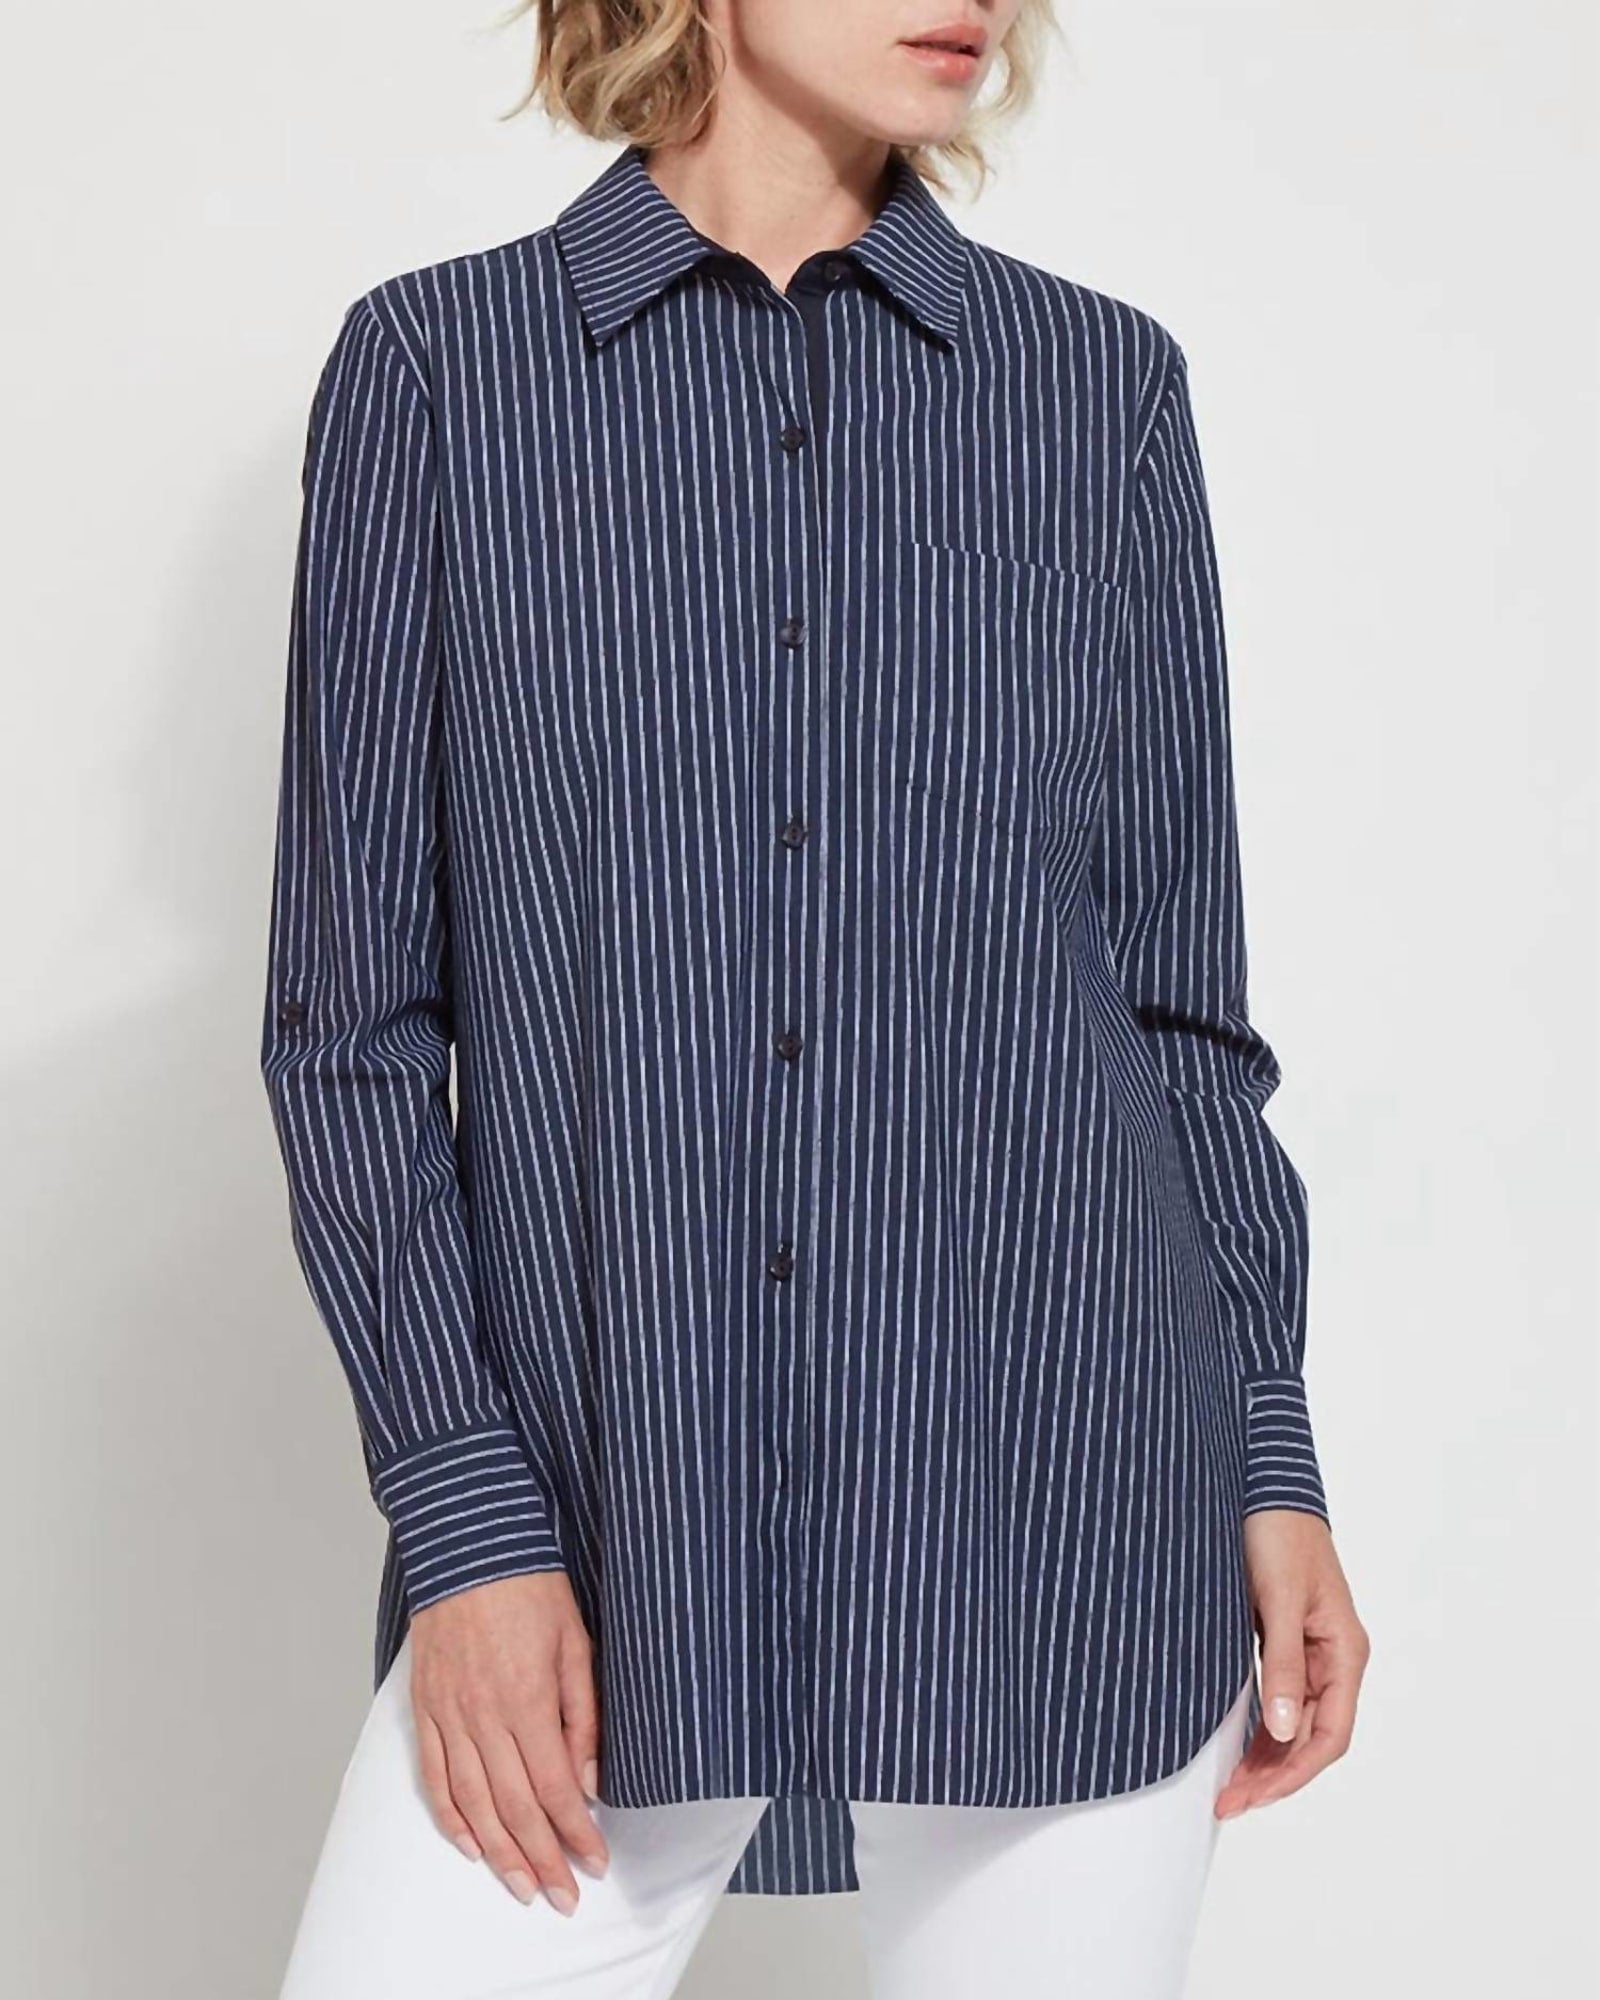 Schiffer Button Down Shirt in Navy Contrast Stripe | Navy Contrast Stripe